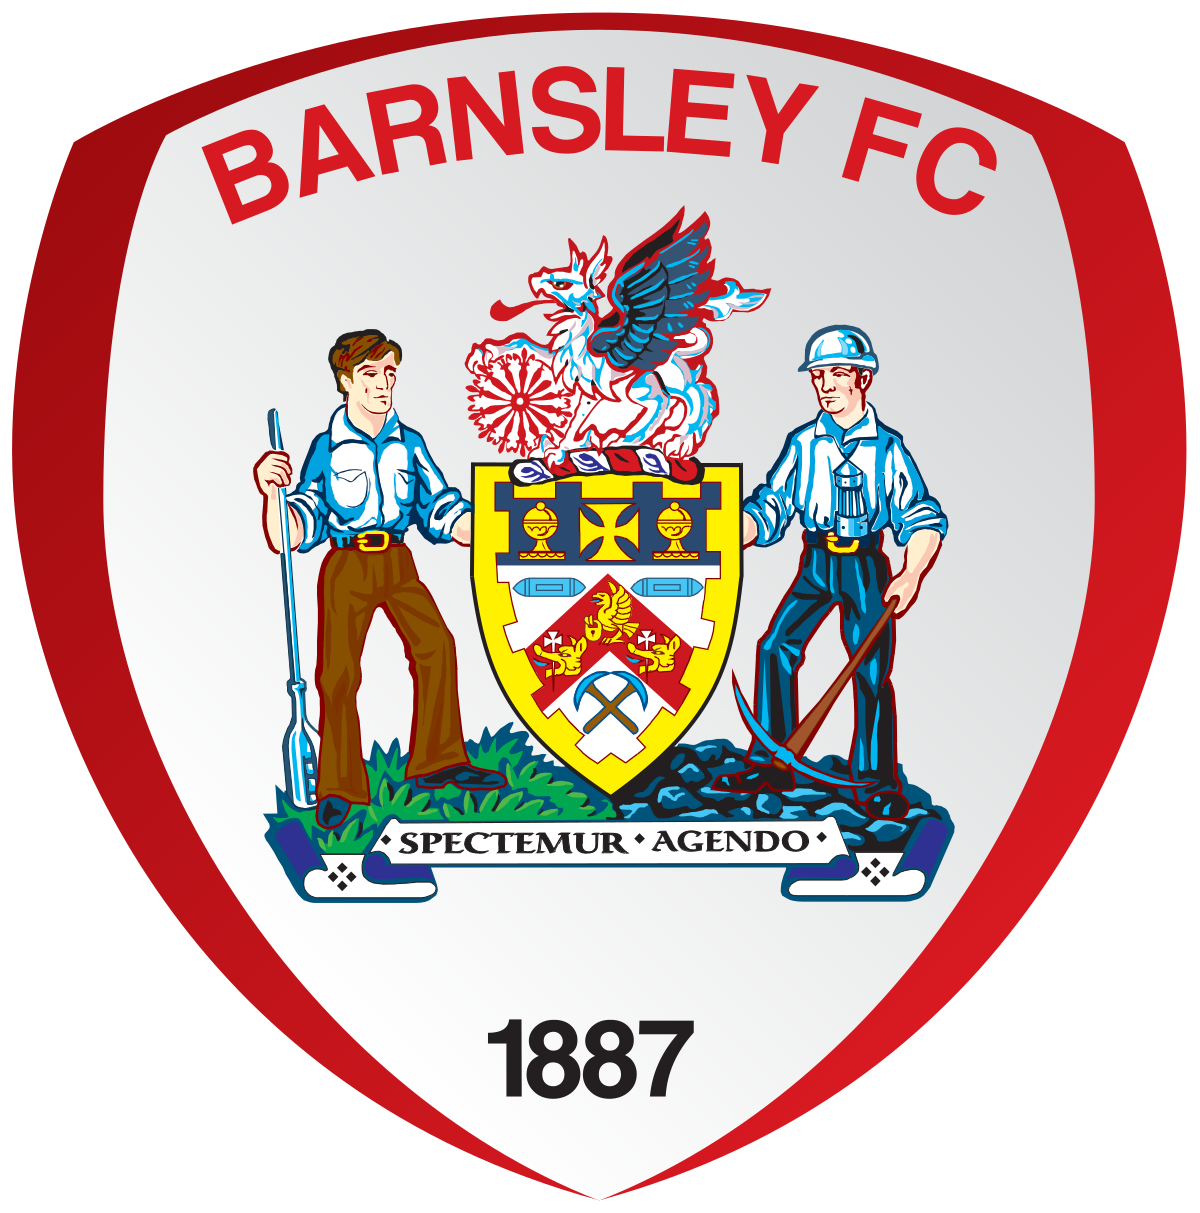 Barnsley W logo